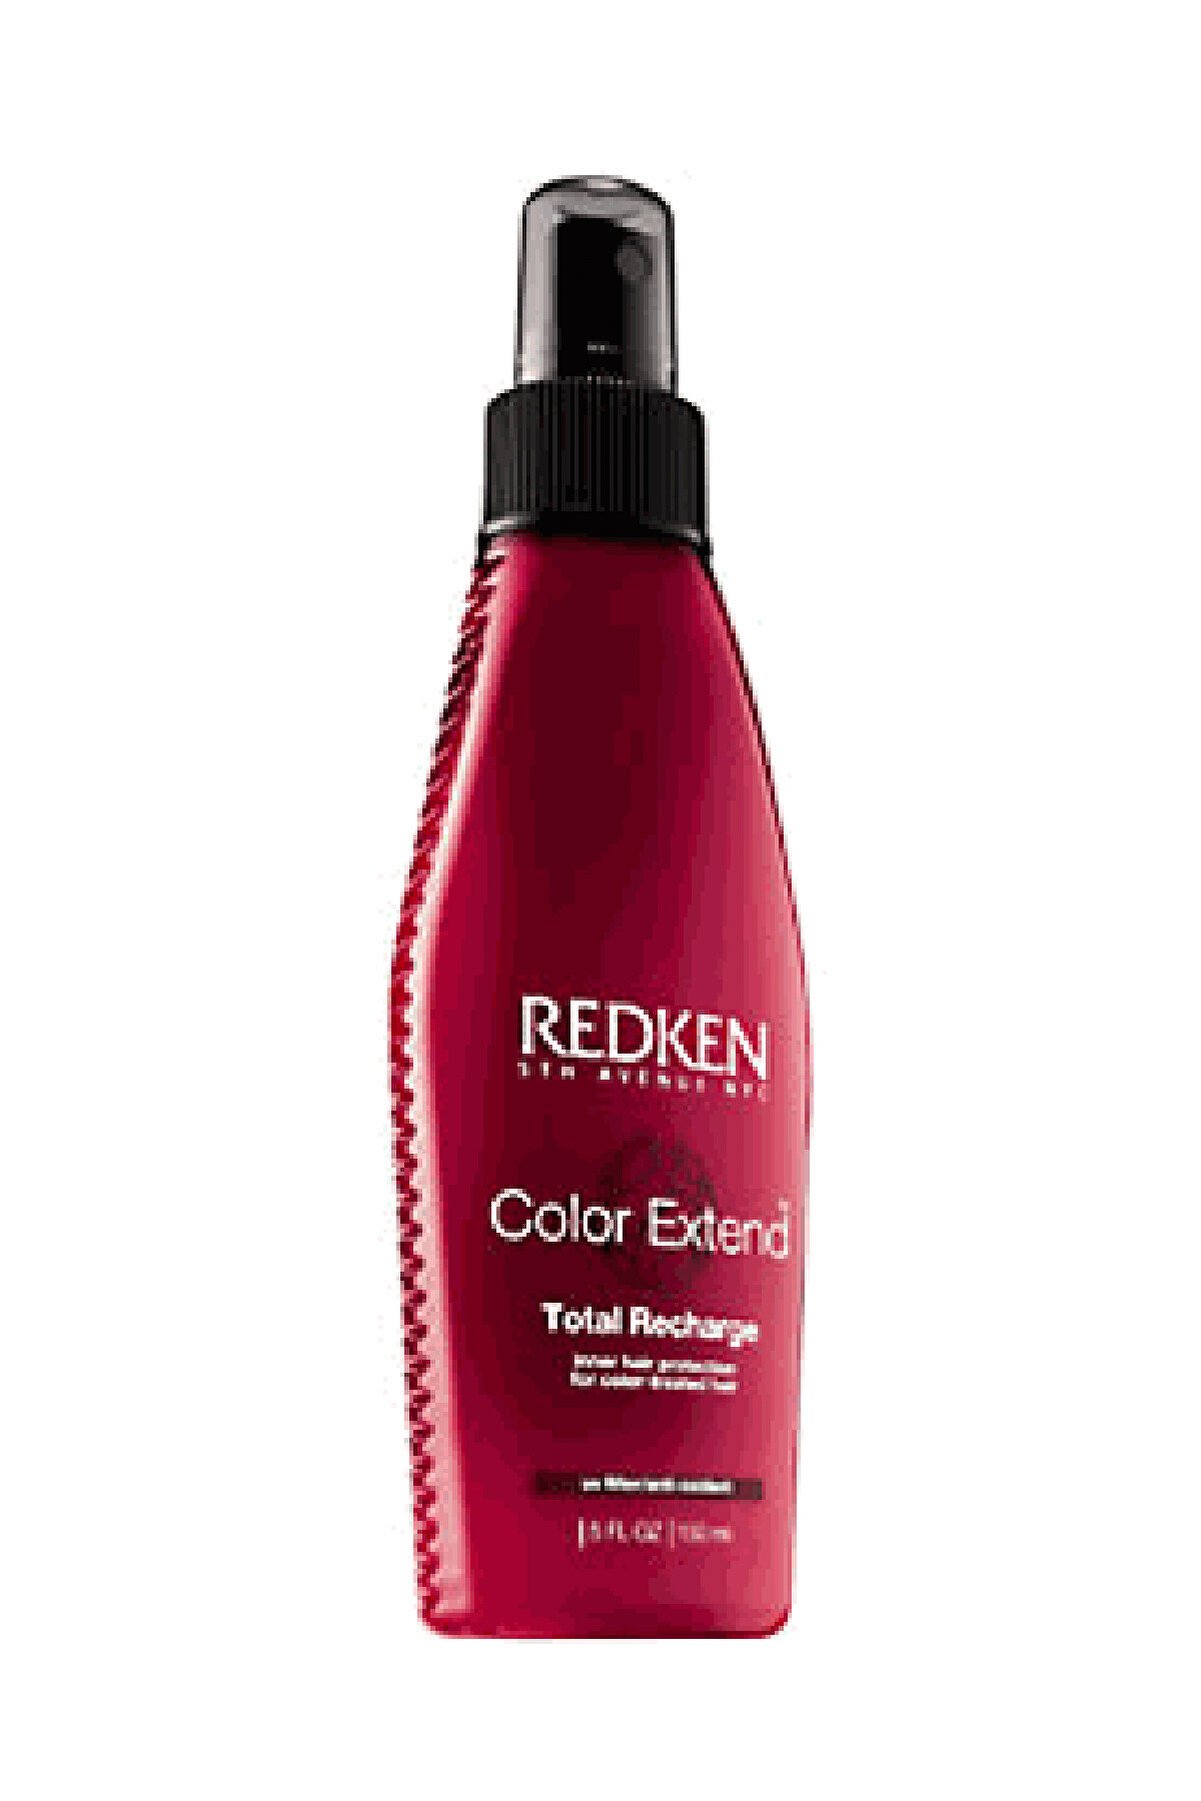 REDKEN Saç Rengini Koruyucu Sprey 150 ml - Color Extend Total Recharge  743877049795